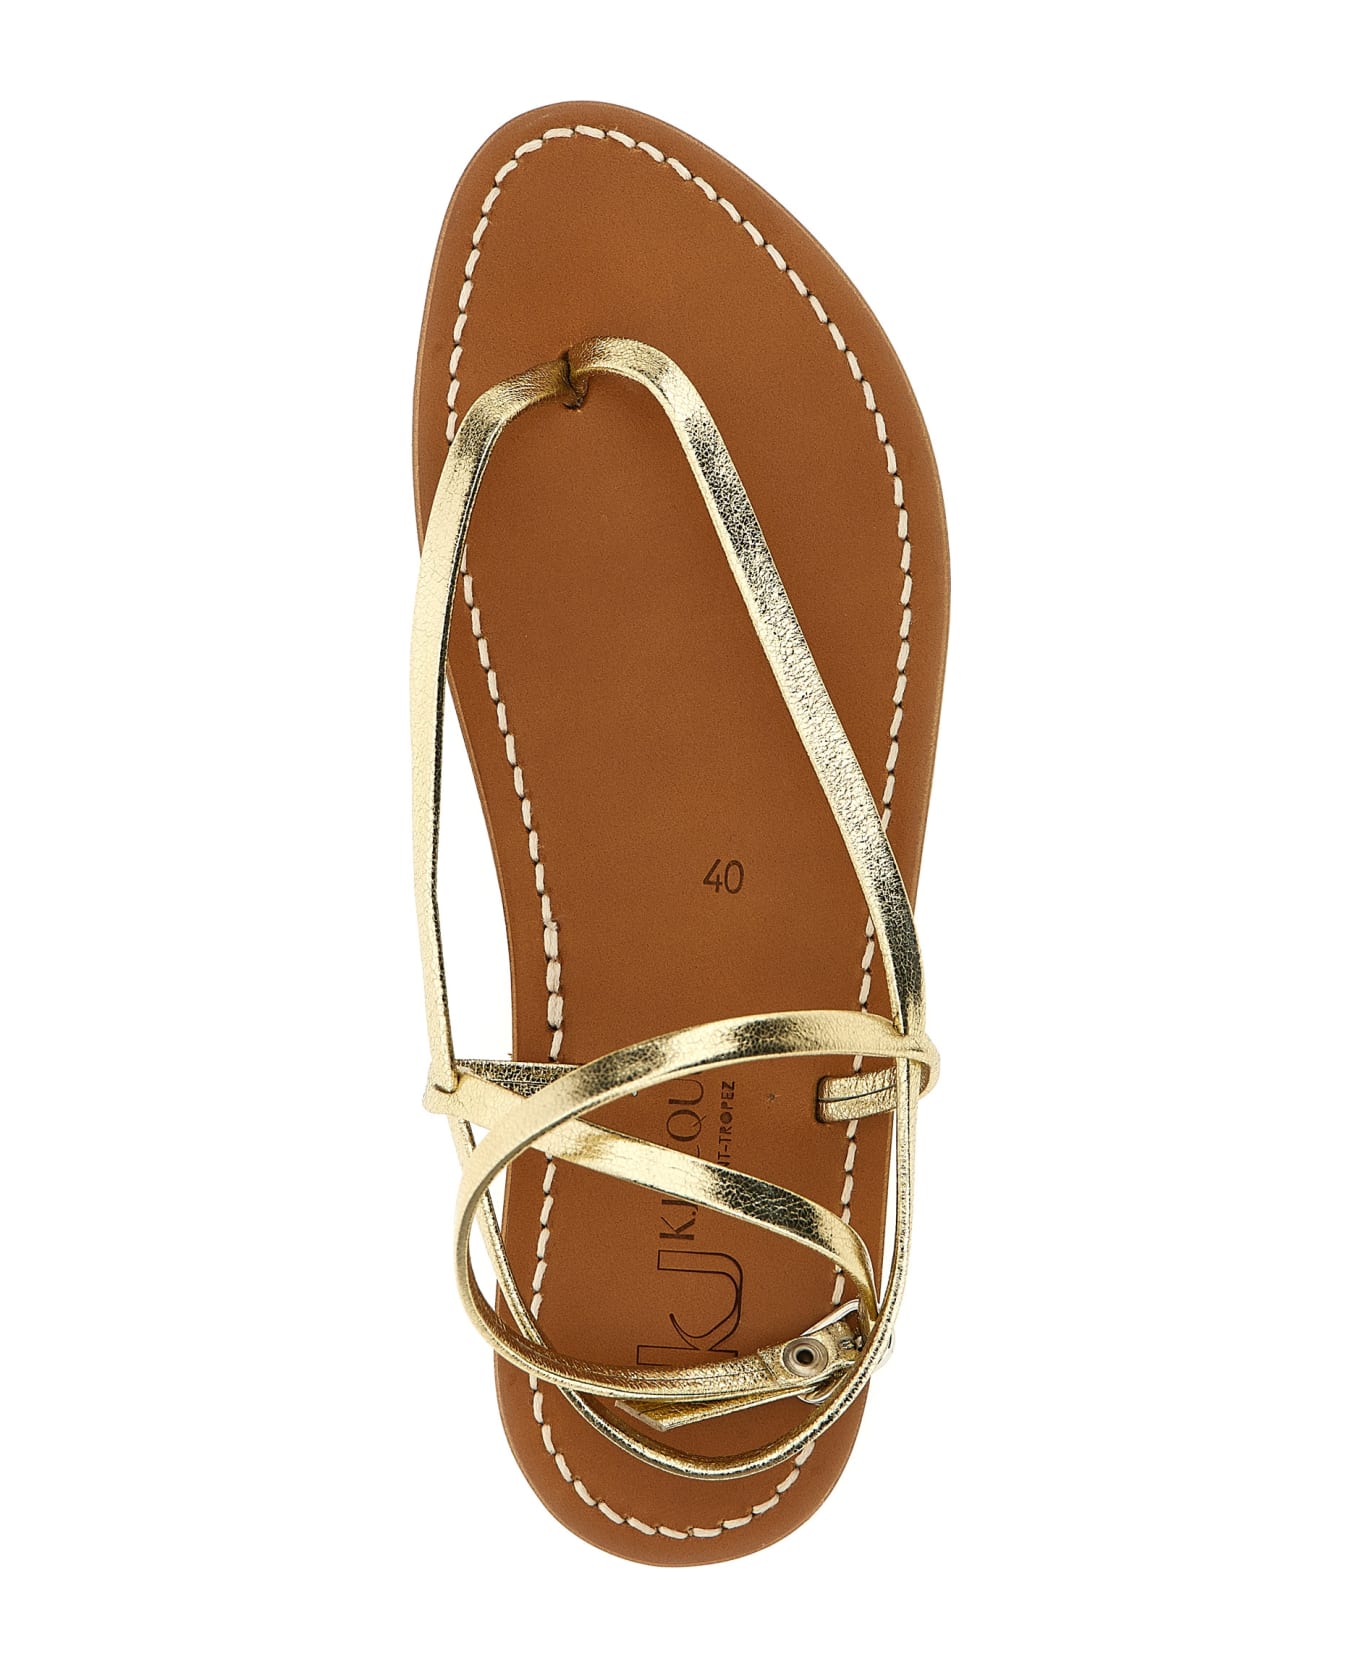 K.Jacques 'delta' Sandals - Gold